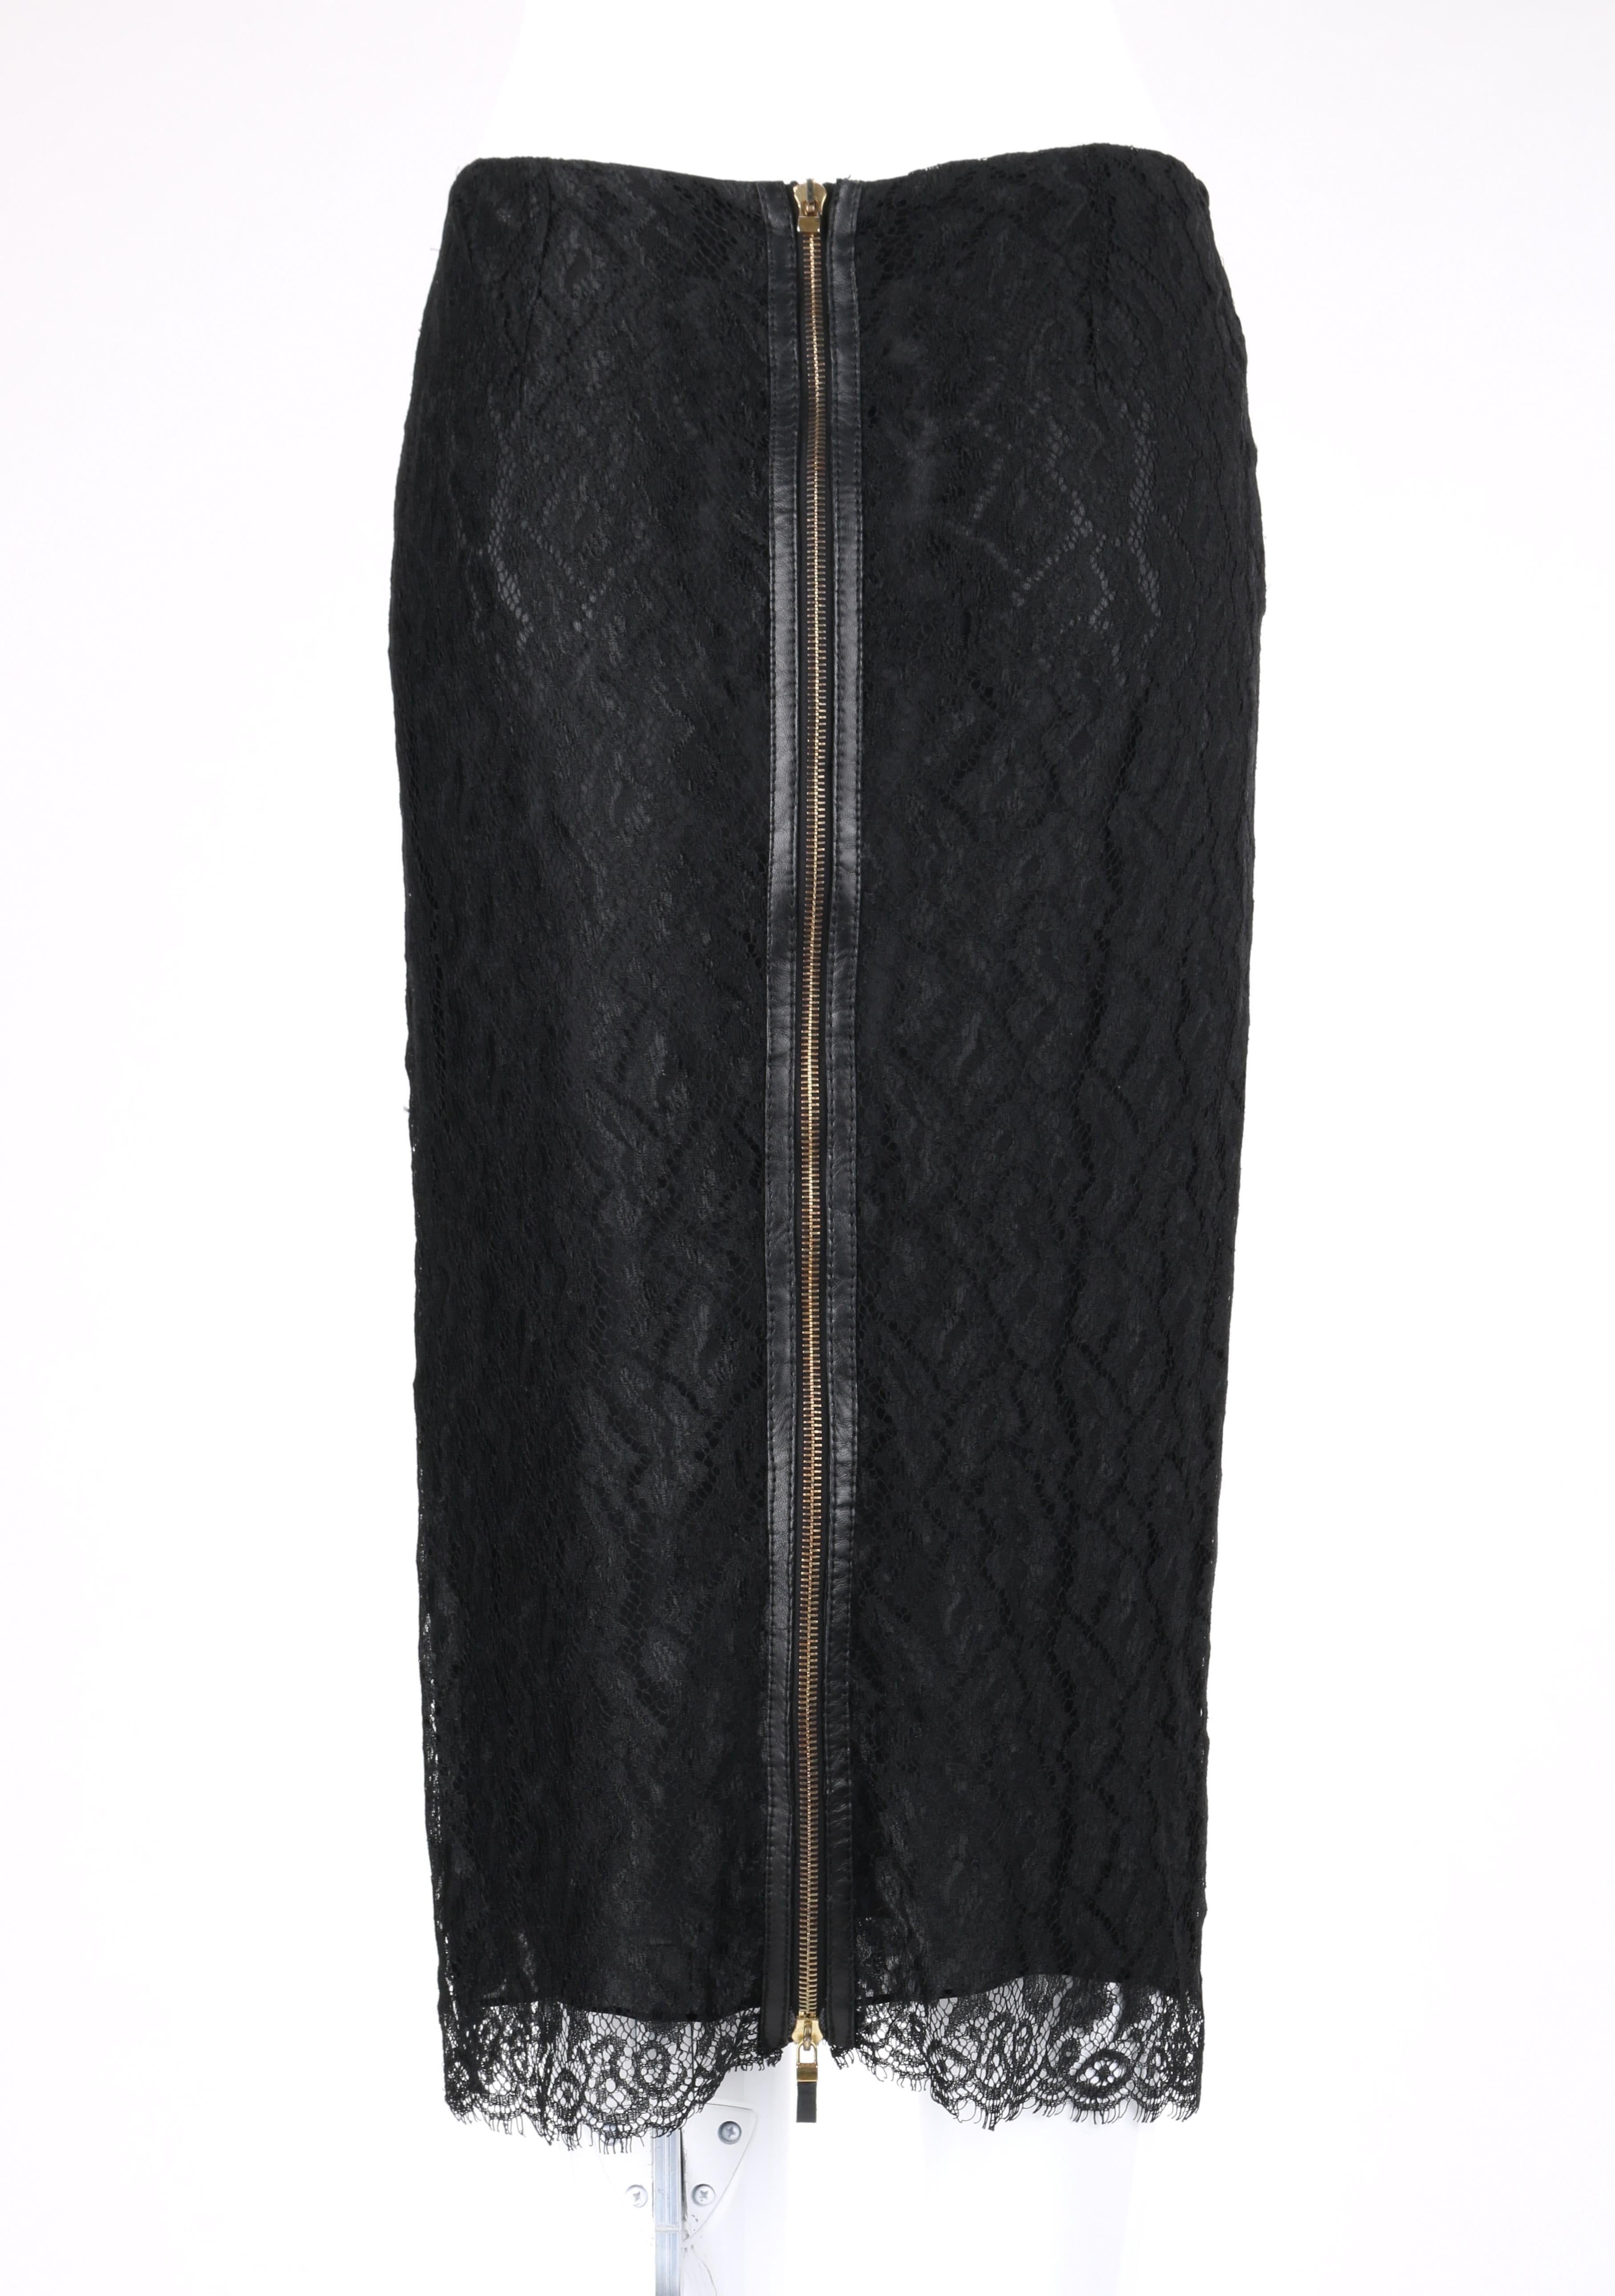 black lace pencil skirt